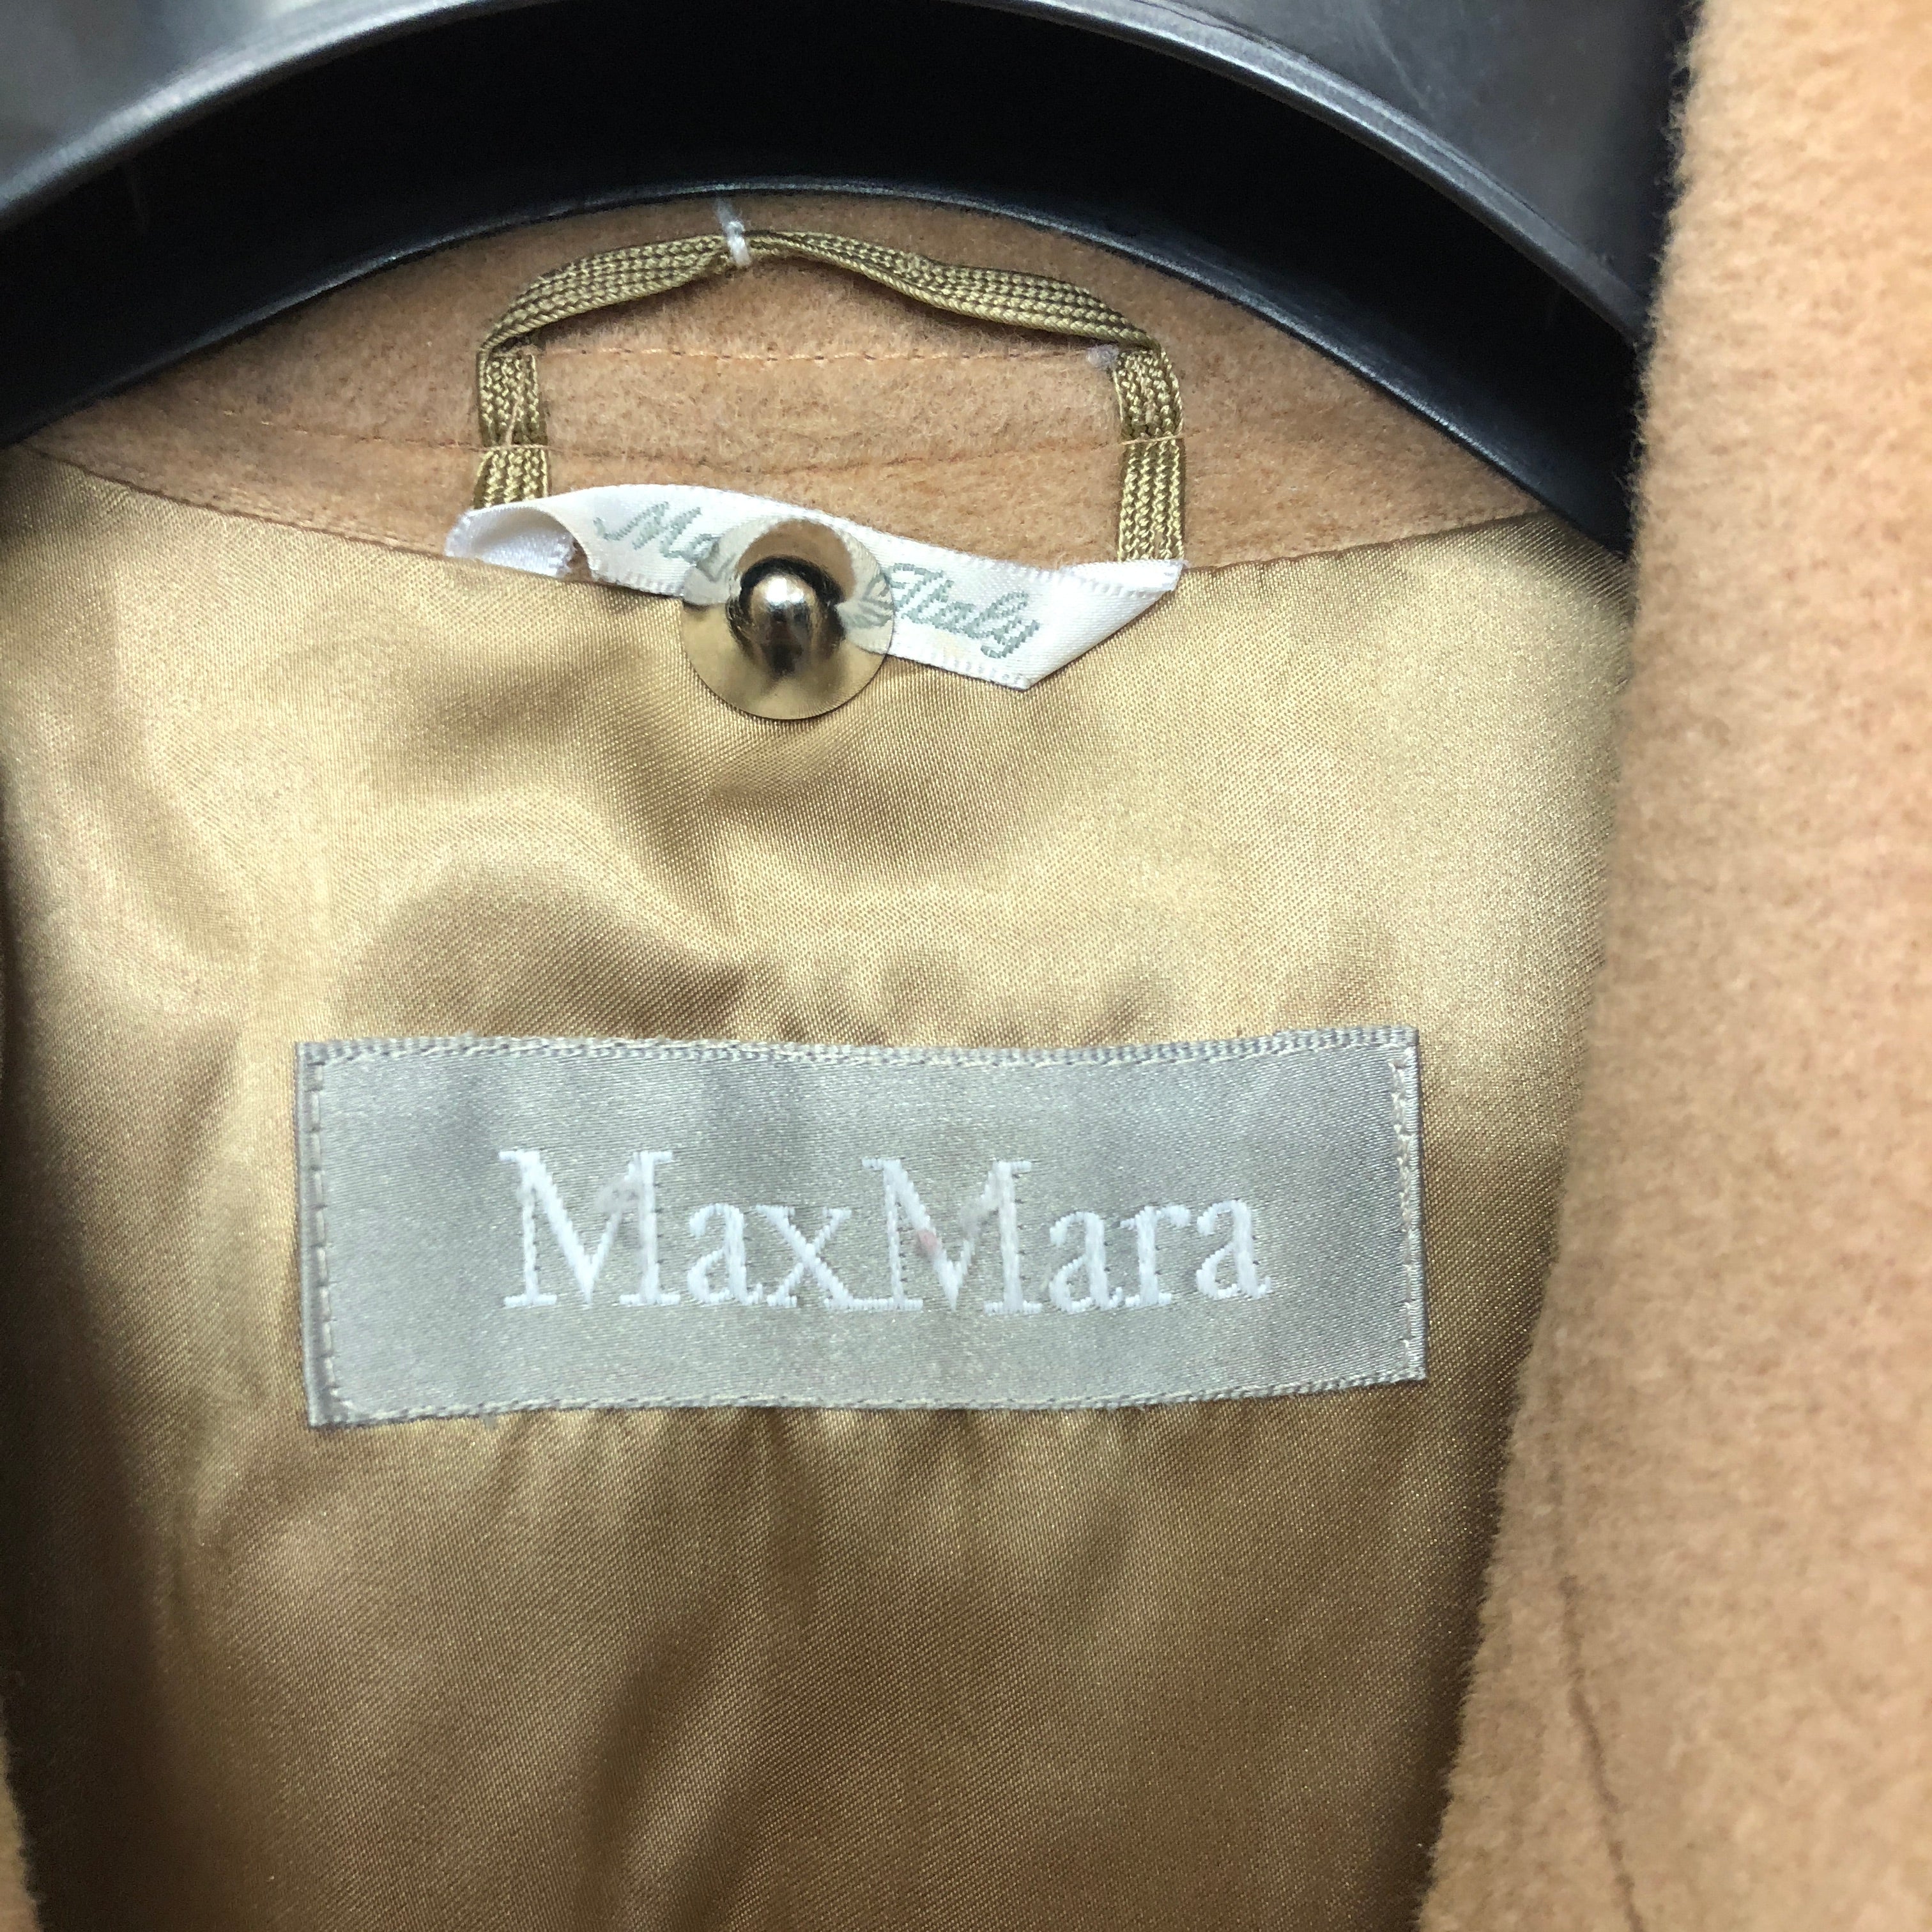 MAXMARA 1990s wool coat L